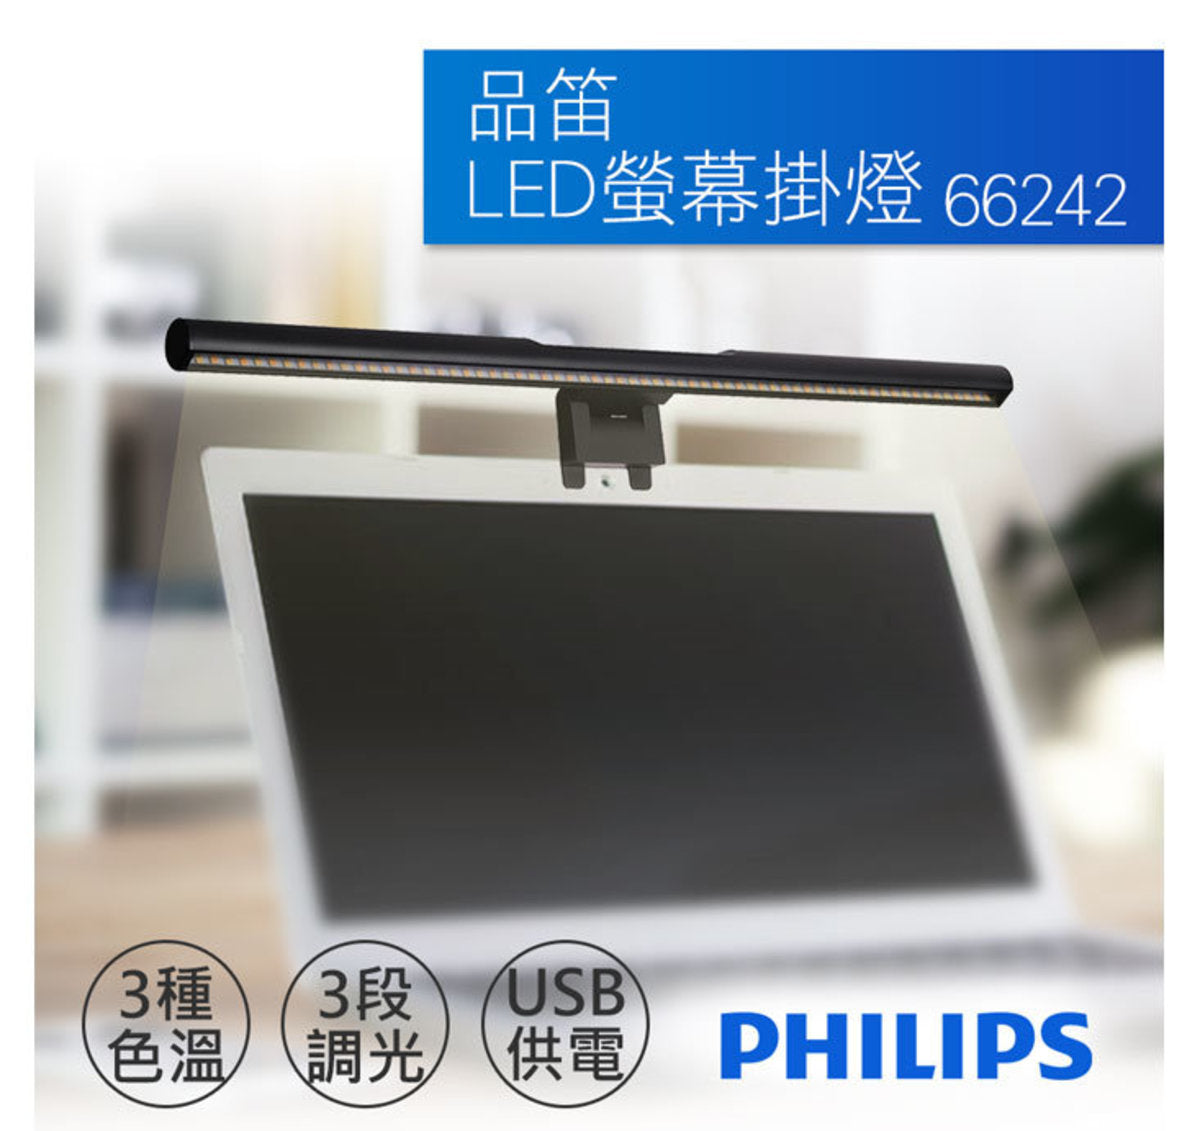 Philips - Philips Desk Lamp | myHomeOffice Pindi LED Eye Protection Screen Hanging Lamp 66242